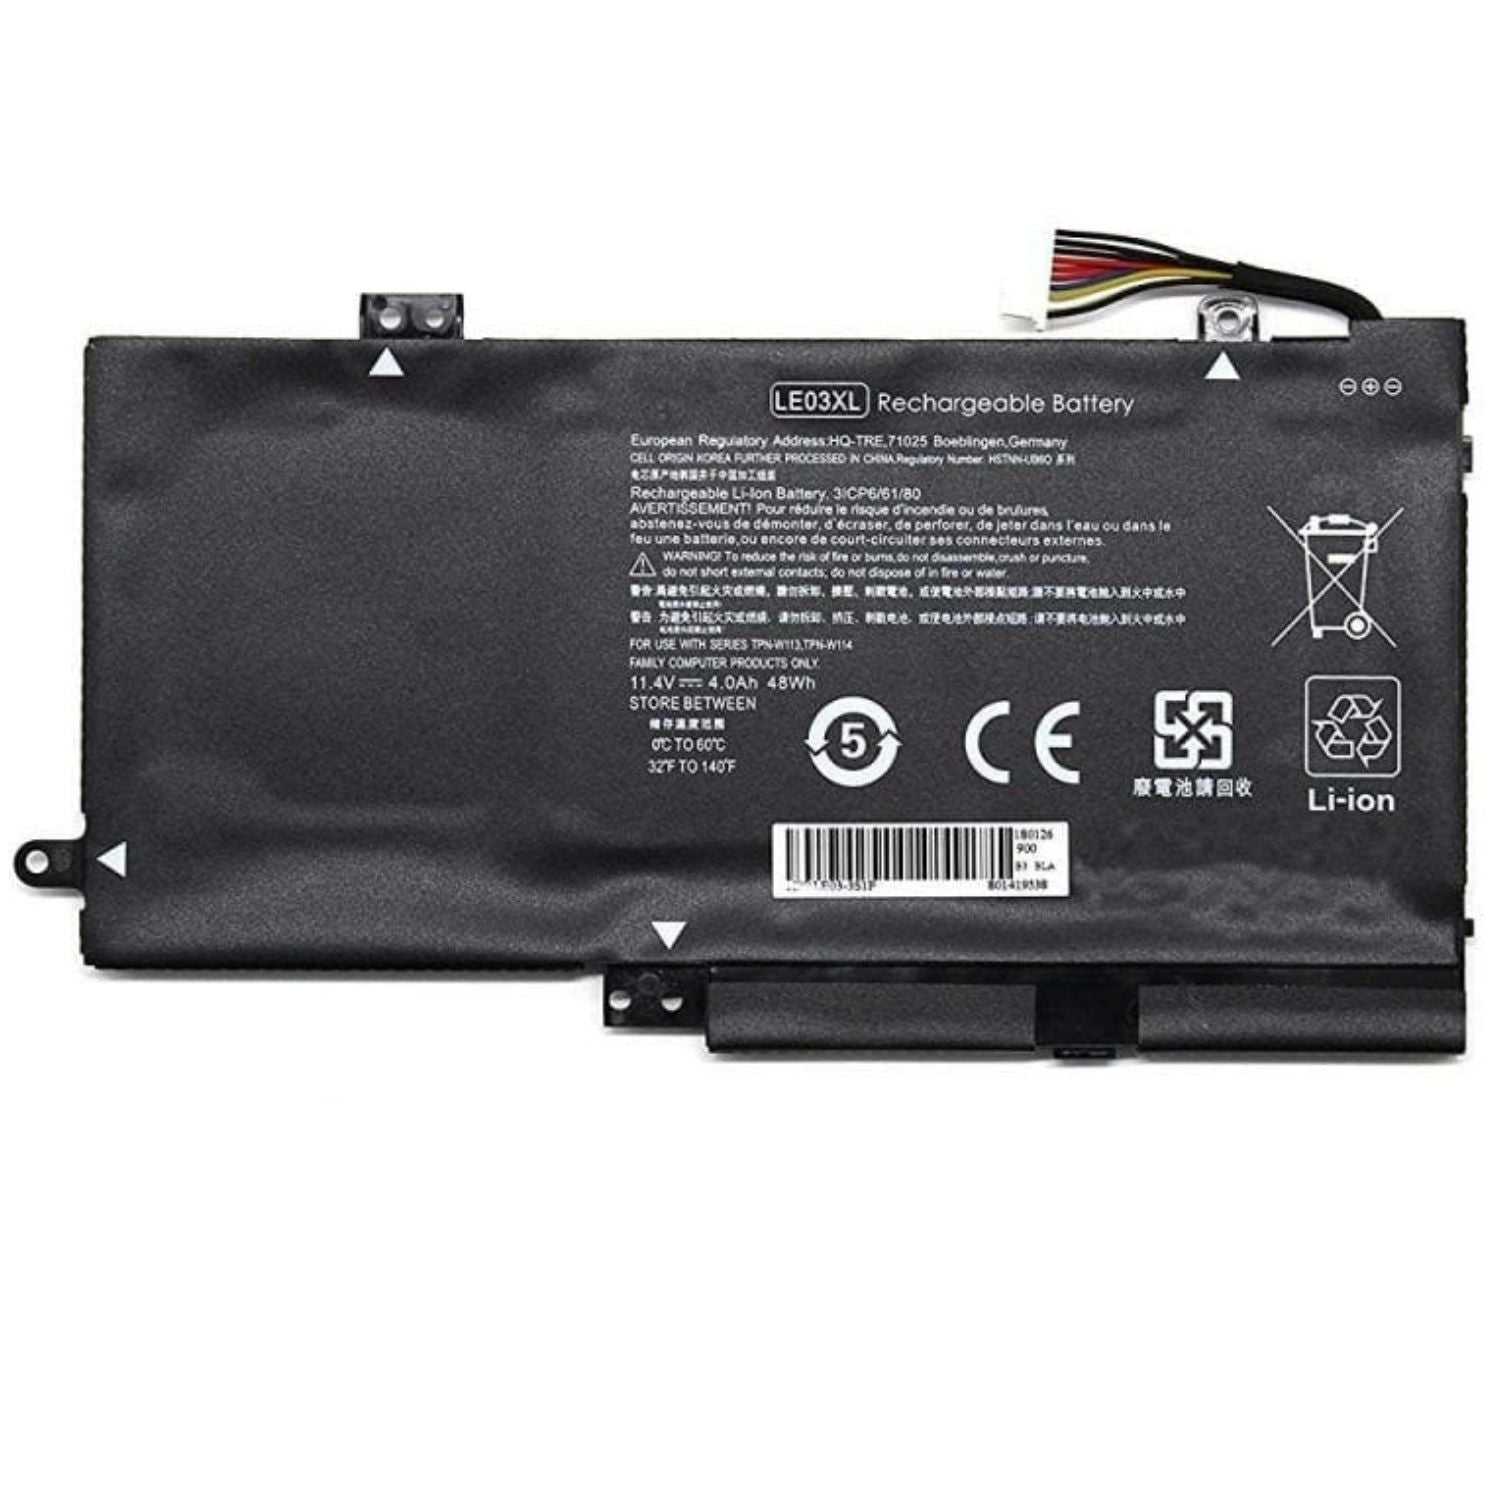 HP LE03XL Battery For LE03 Envy X360 M6-W 15-W: m6-w010dx m6-w101dx m6-w102dx m6-w103dx HP Pavilion X360 13-s000 13-s100 13-s099nr 15-bk010nr 15-bk152nr 15-bk000 HSTNN-PB6M TPN-W113 TPN-W114 UB60 UB6O YB5Q 796220-541 831 LE03048XL-PR Laptop Serie's